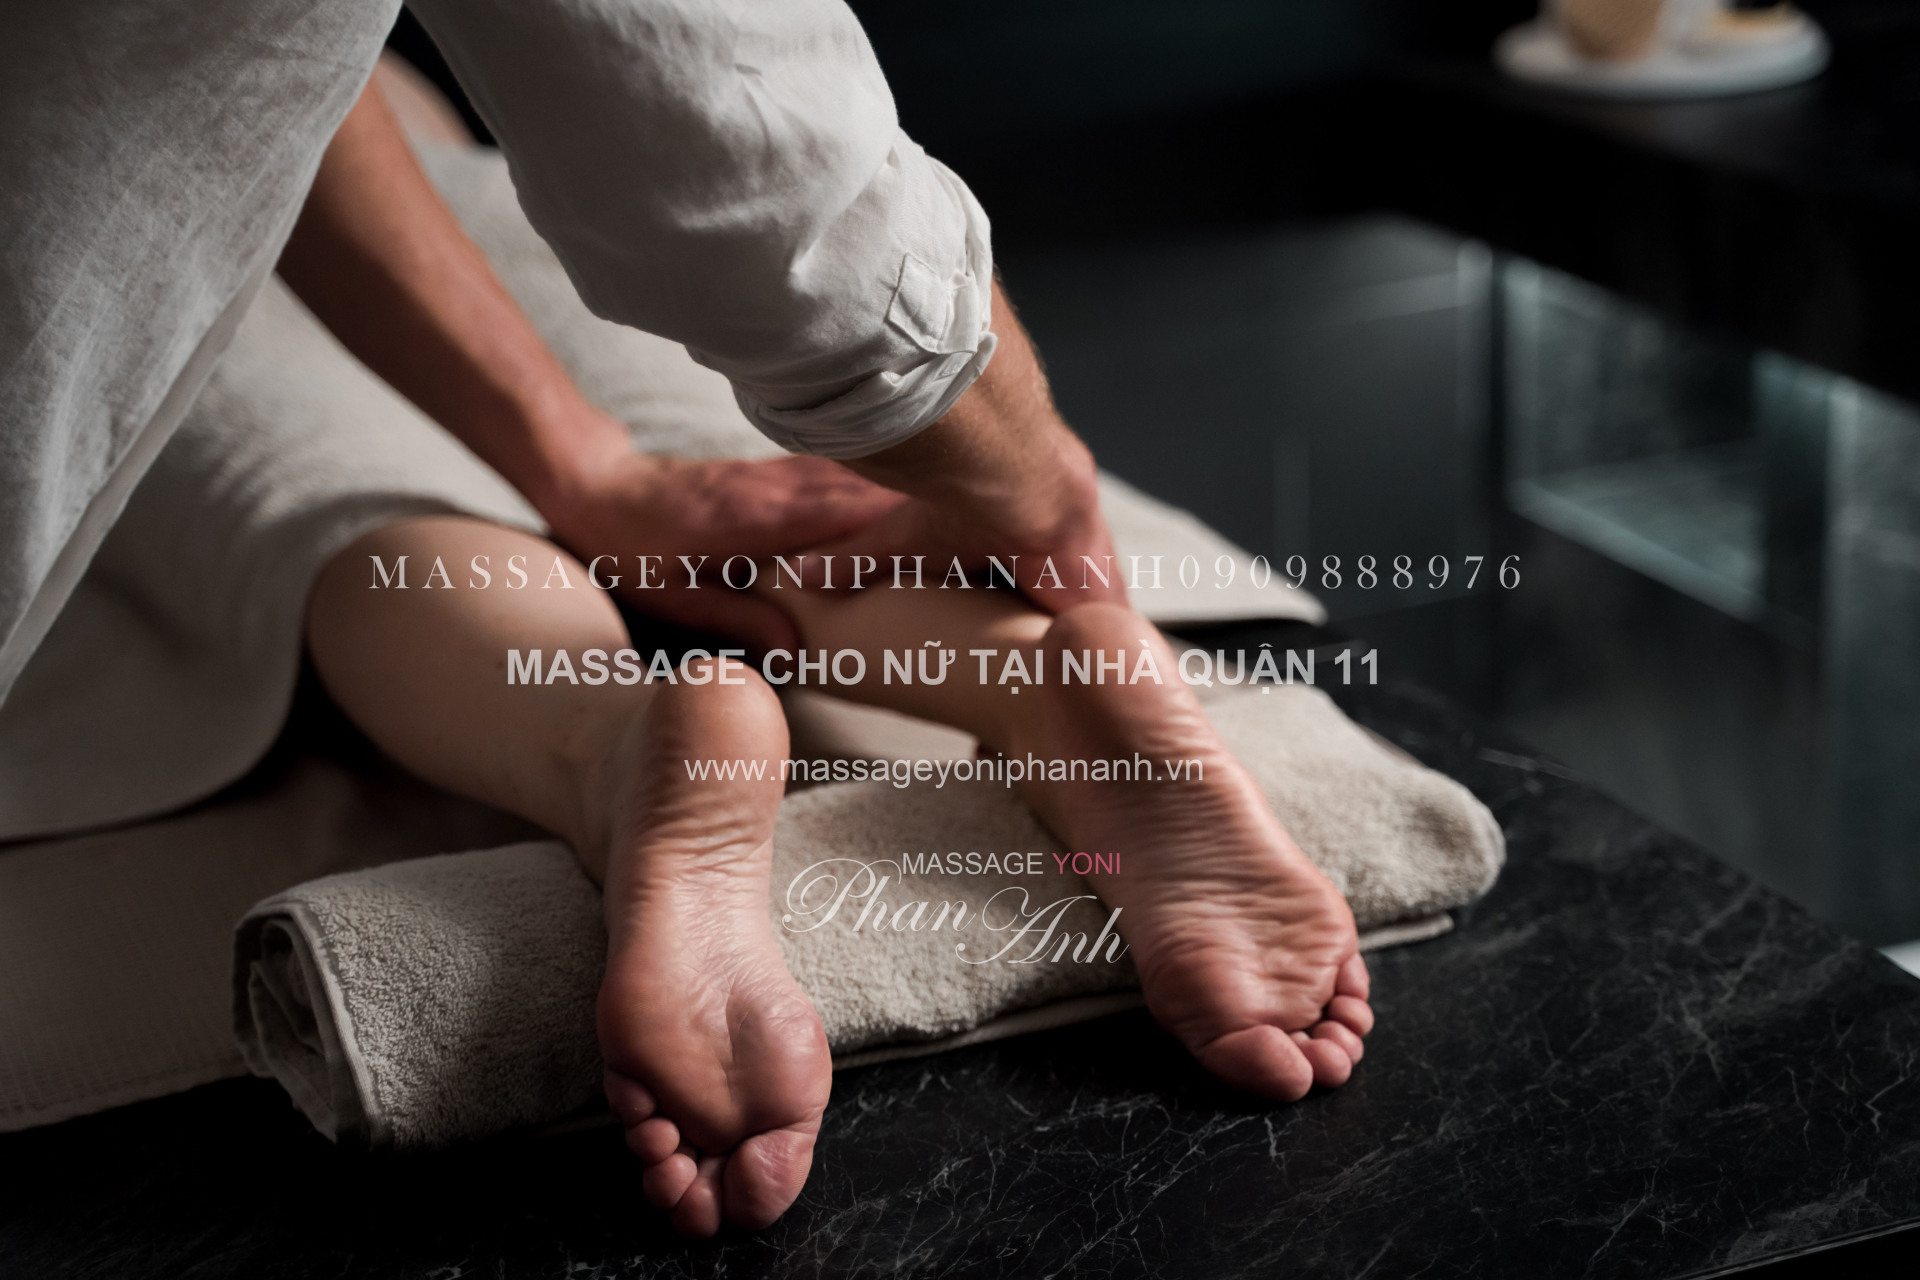 massage-cho-nu-tai-nha-quan-11